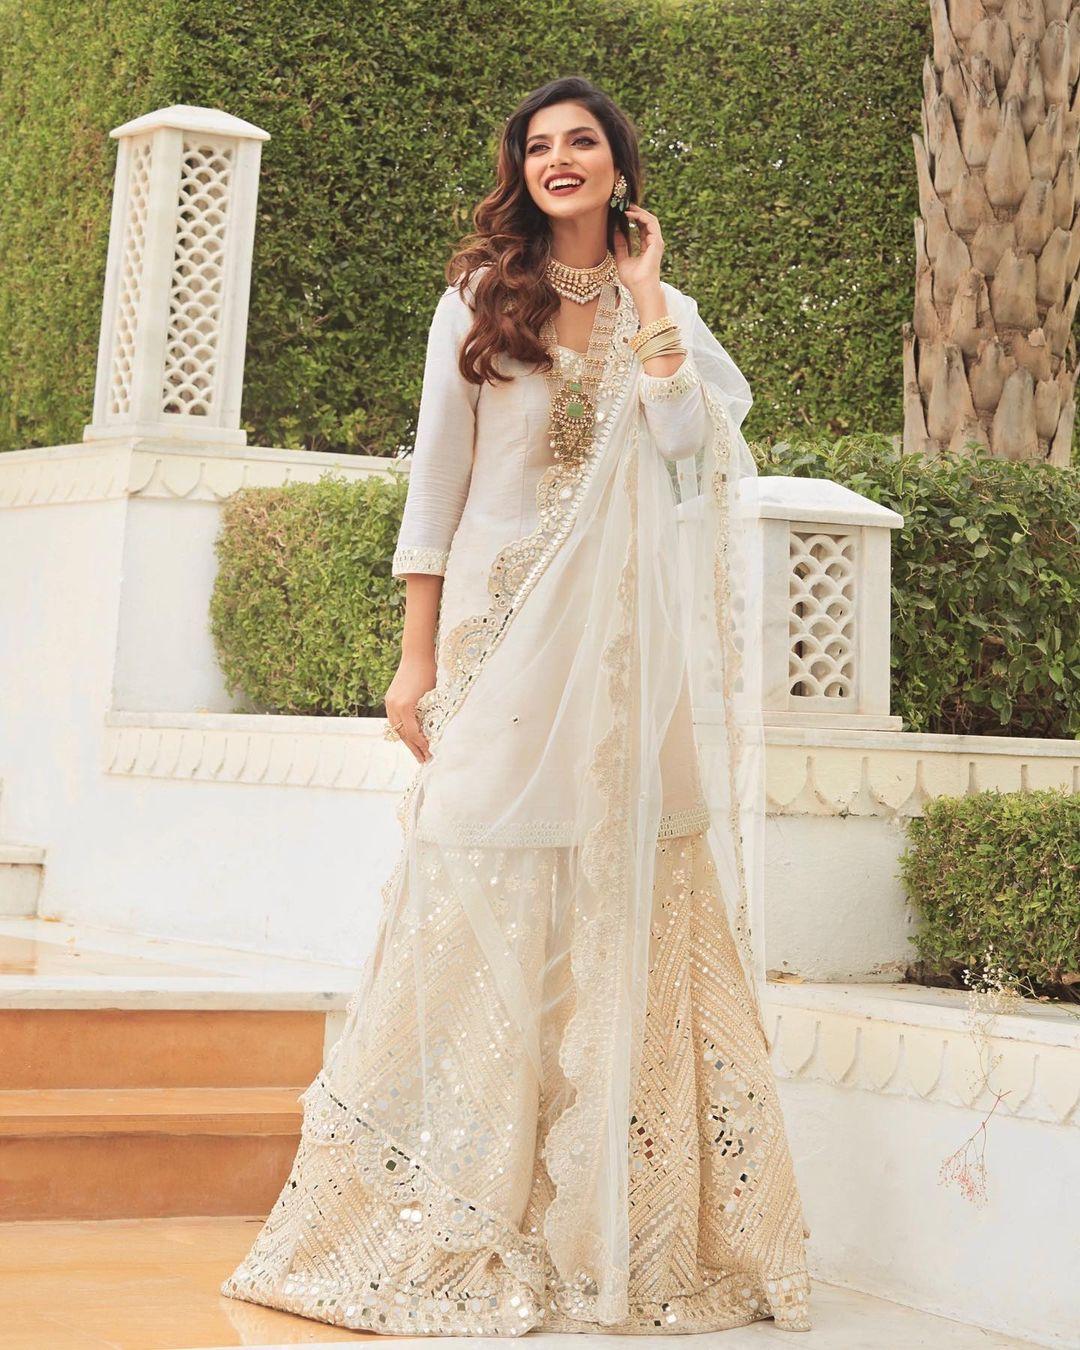 Sridevi Kapoor's Stunning Karwa Chauth Look – South India Fashion |  Sabyasachi sarees, Indian bridal wear, South indian wedding saree